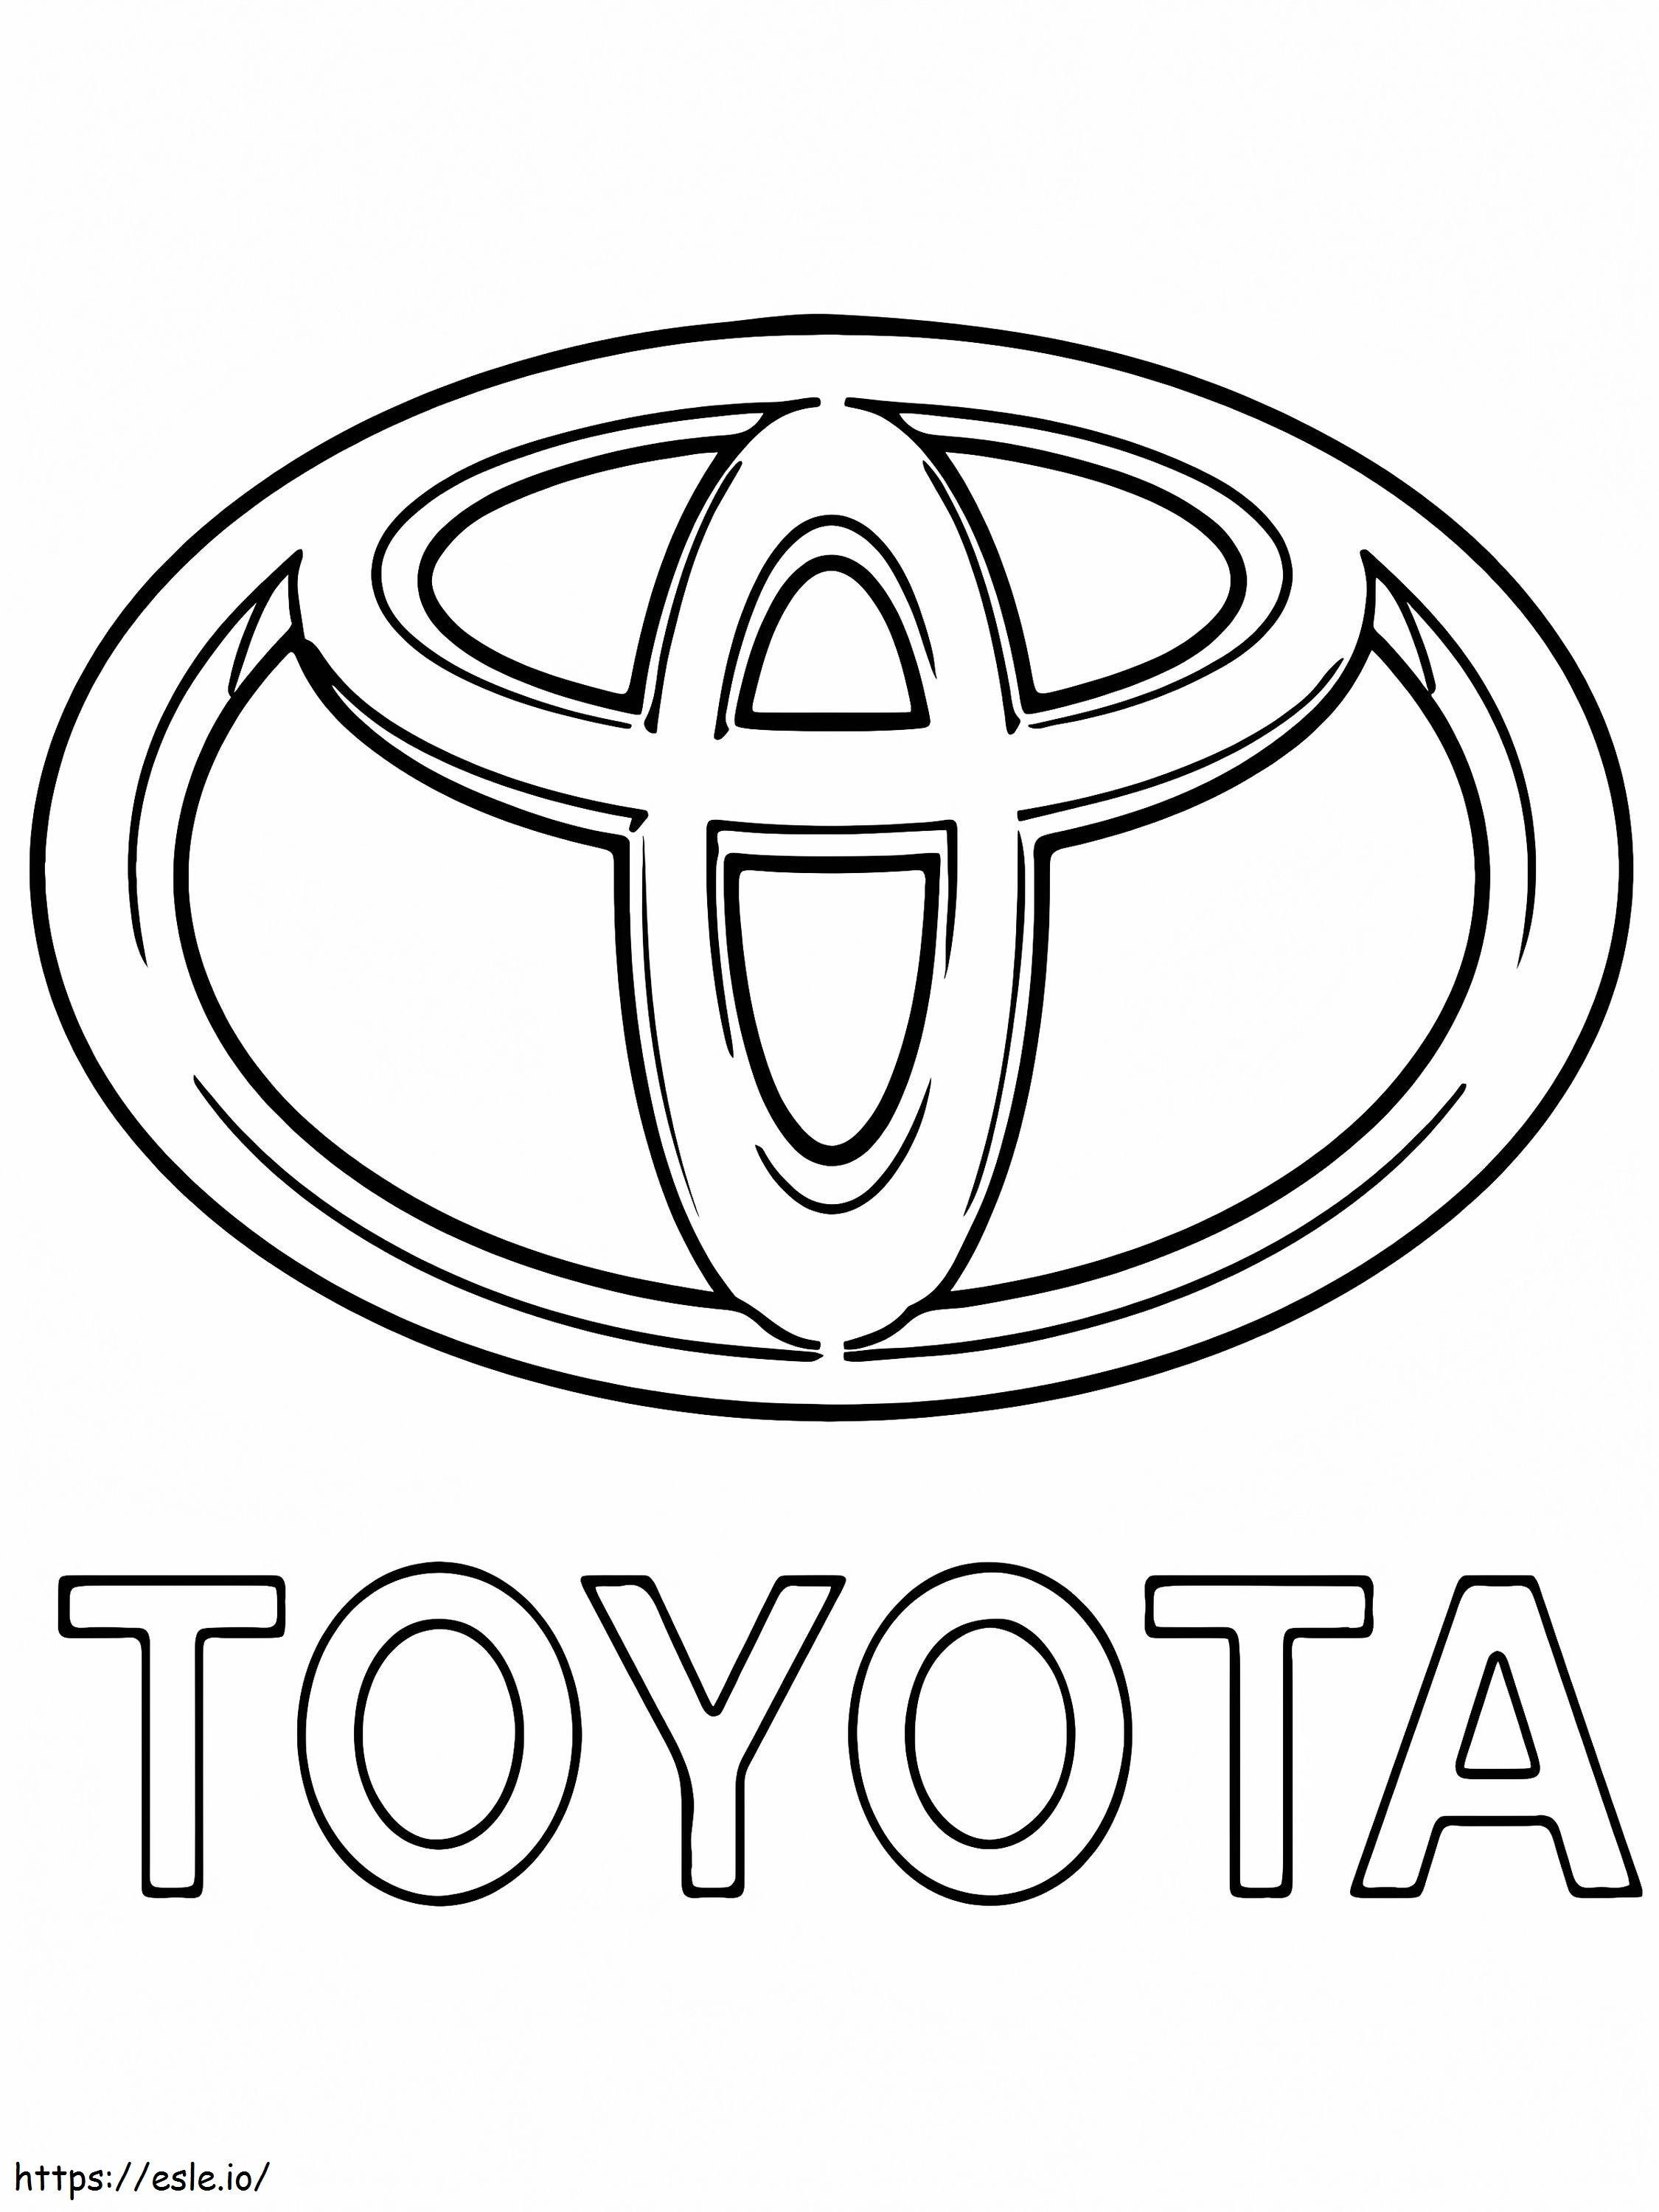 Toyota auto-logo kleurplaat kleurplaat